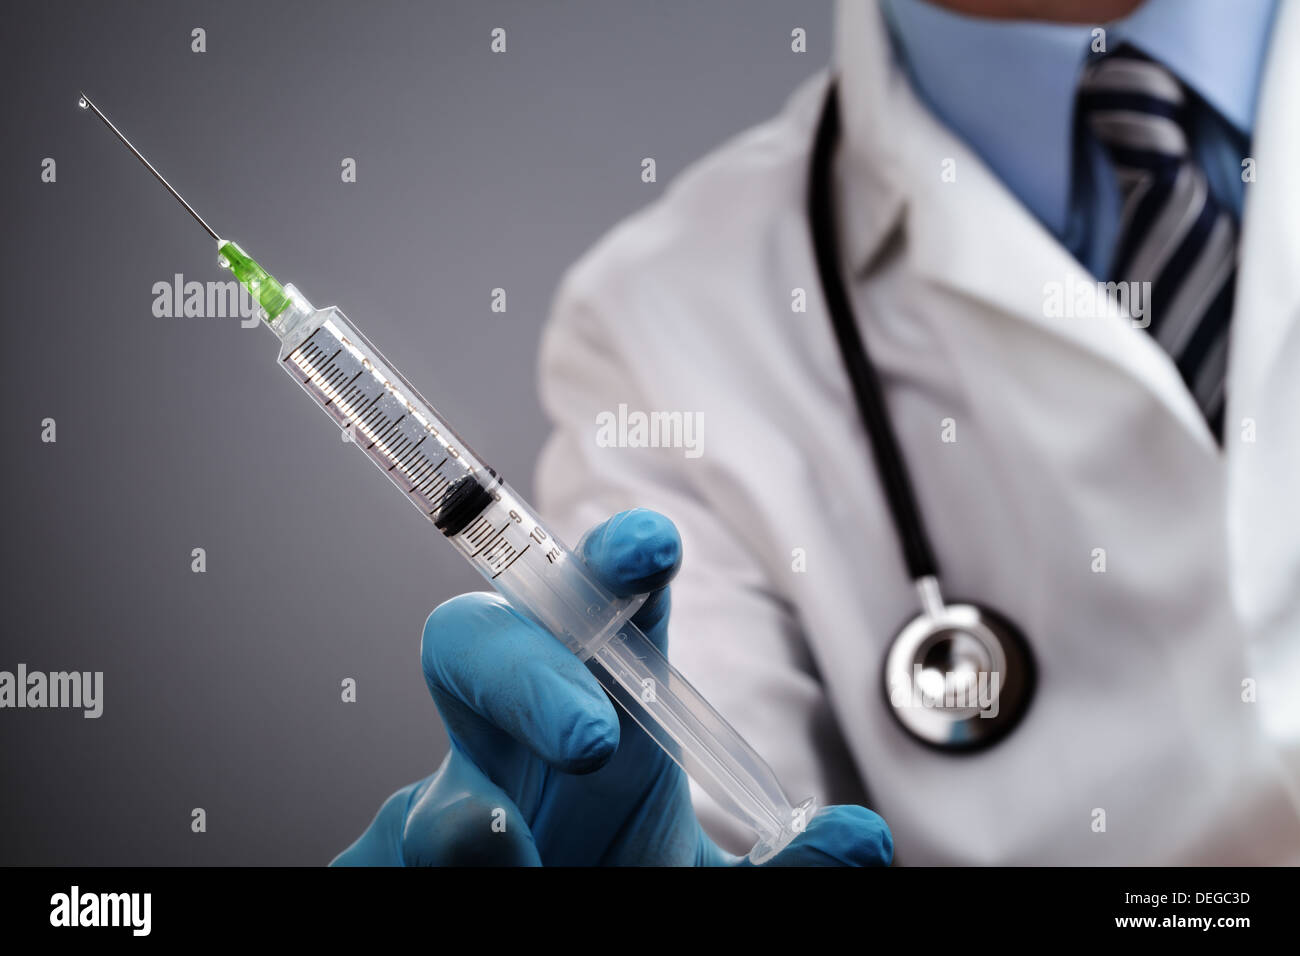 Doctor with syringe and stethoscope Stock Photo